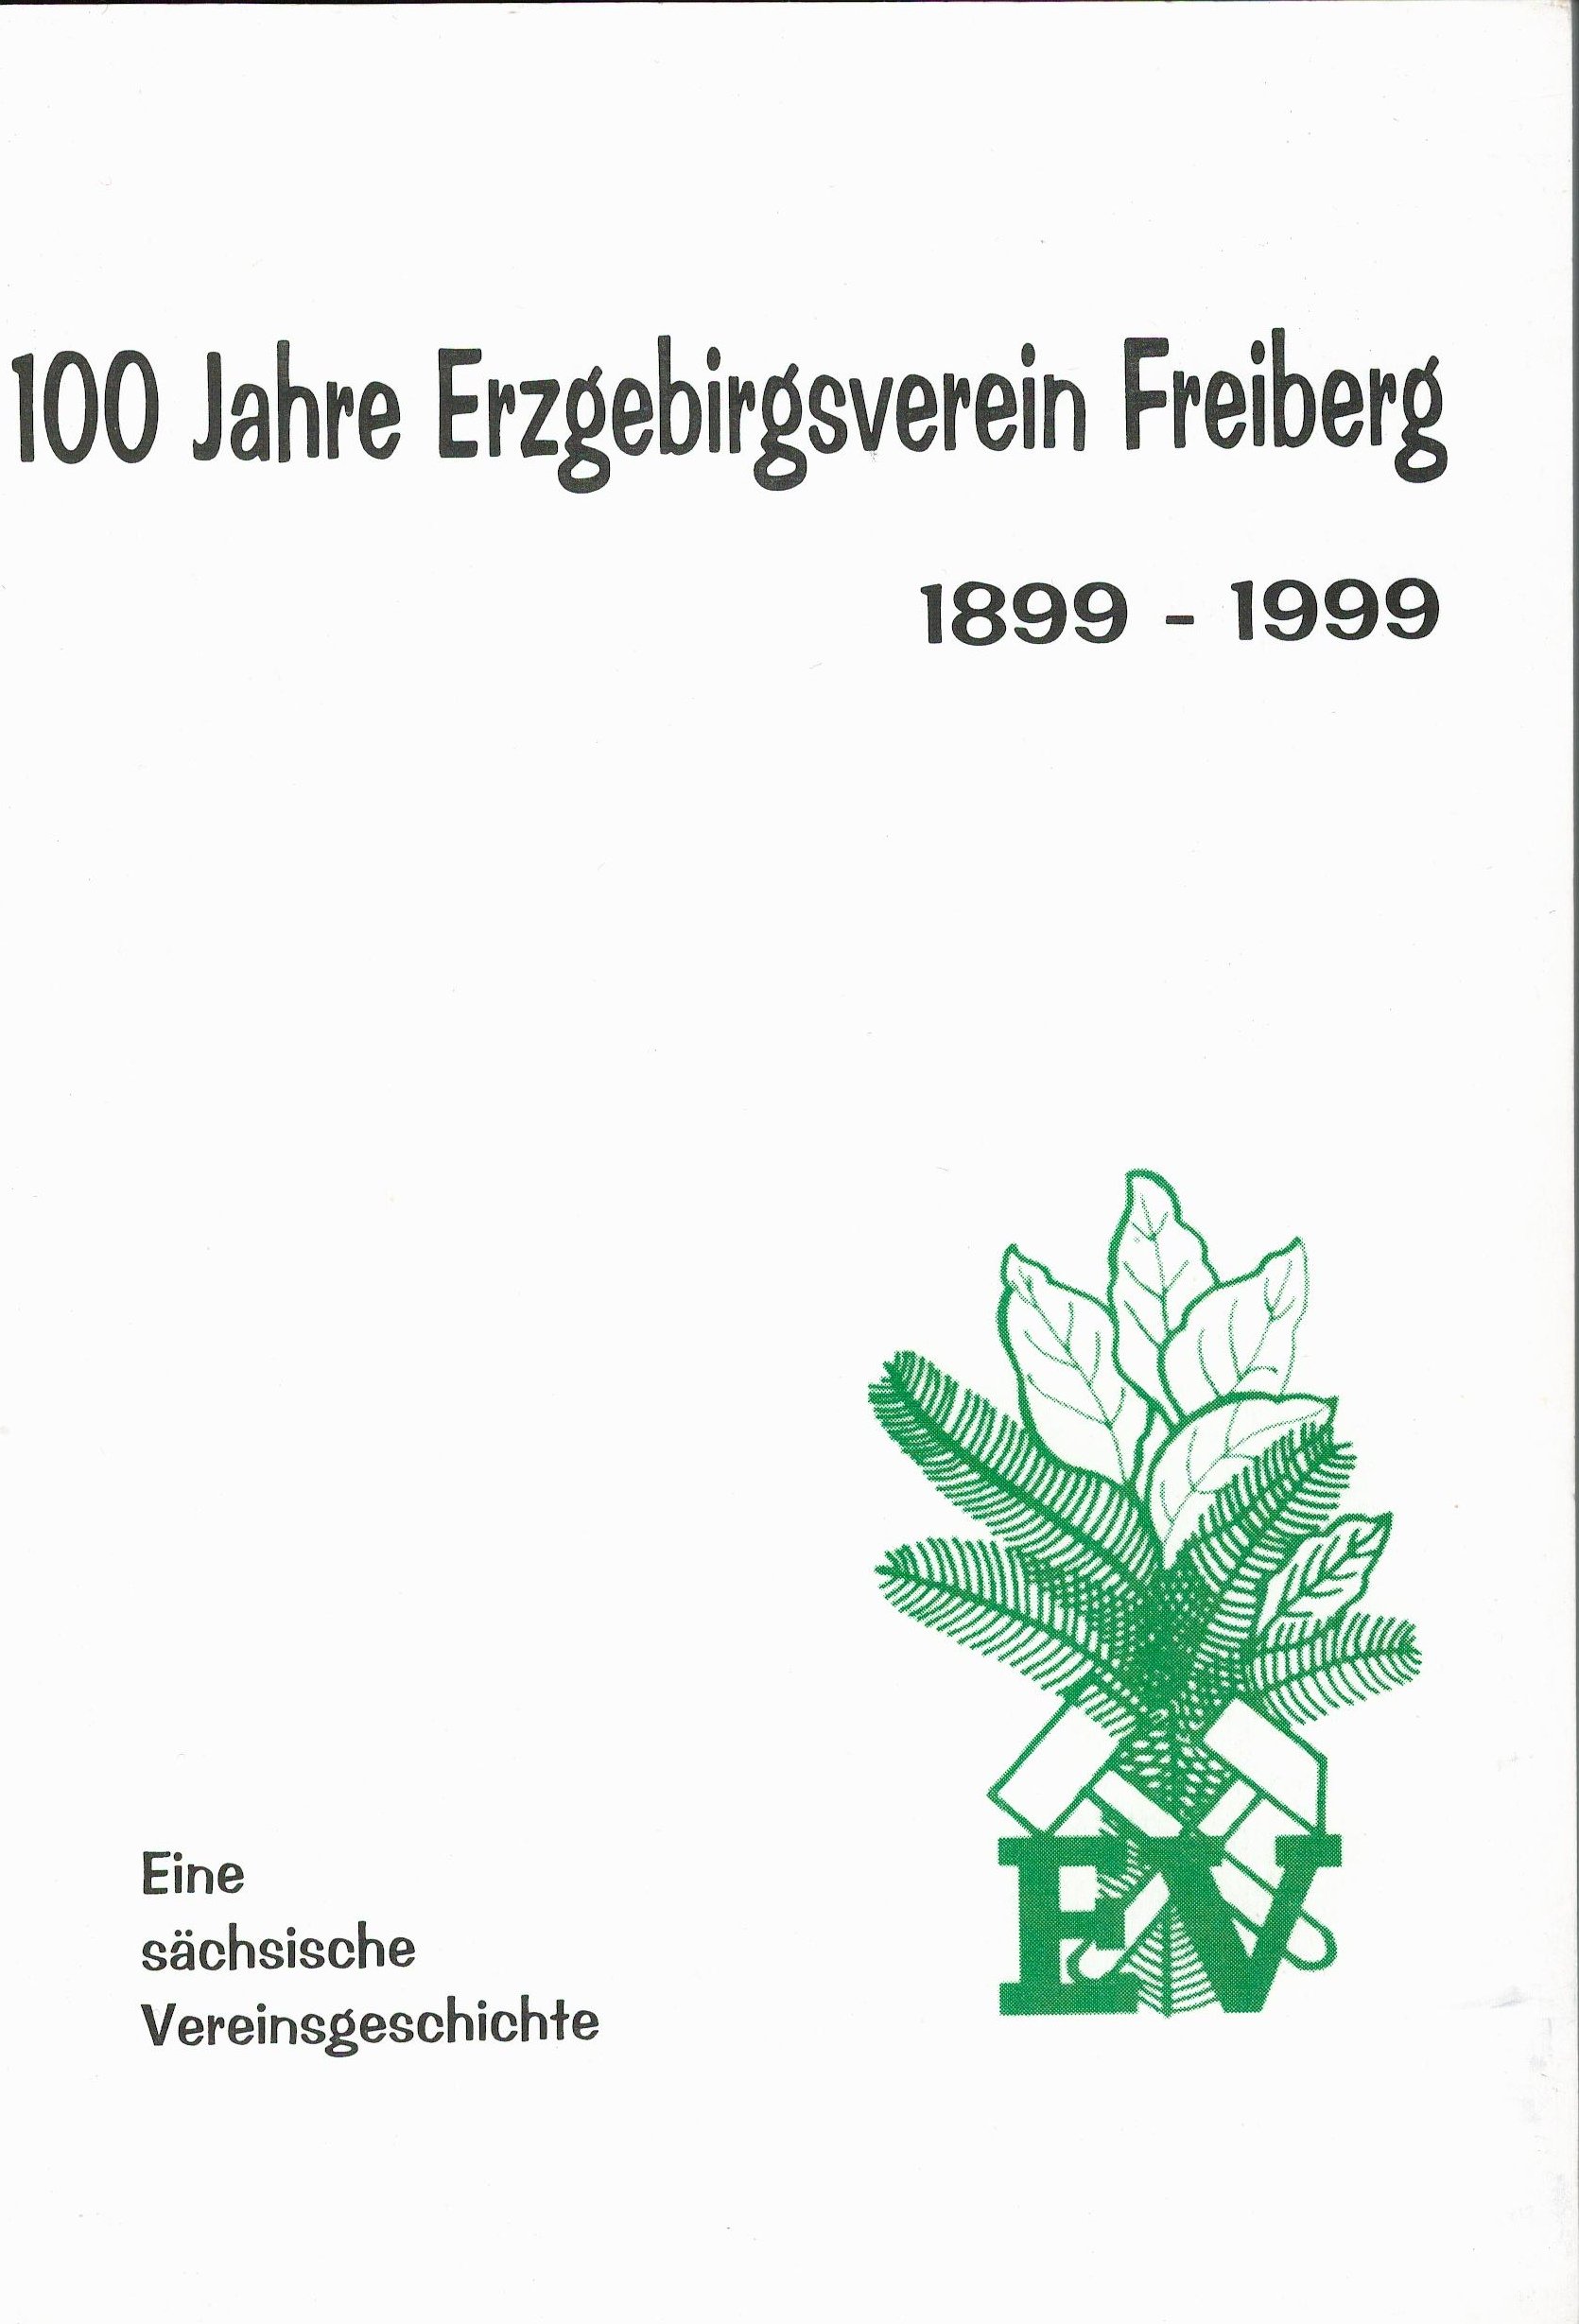 100 Jahre Erzgebirgsverein Freiberg 1899 - 1999 (Archiv SAXONIA-FREIBERG-STIFTUNG CC BY-NC-SA)